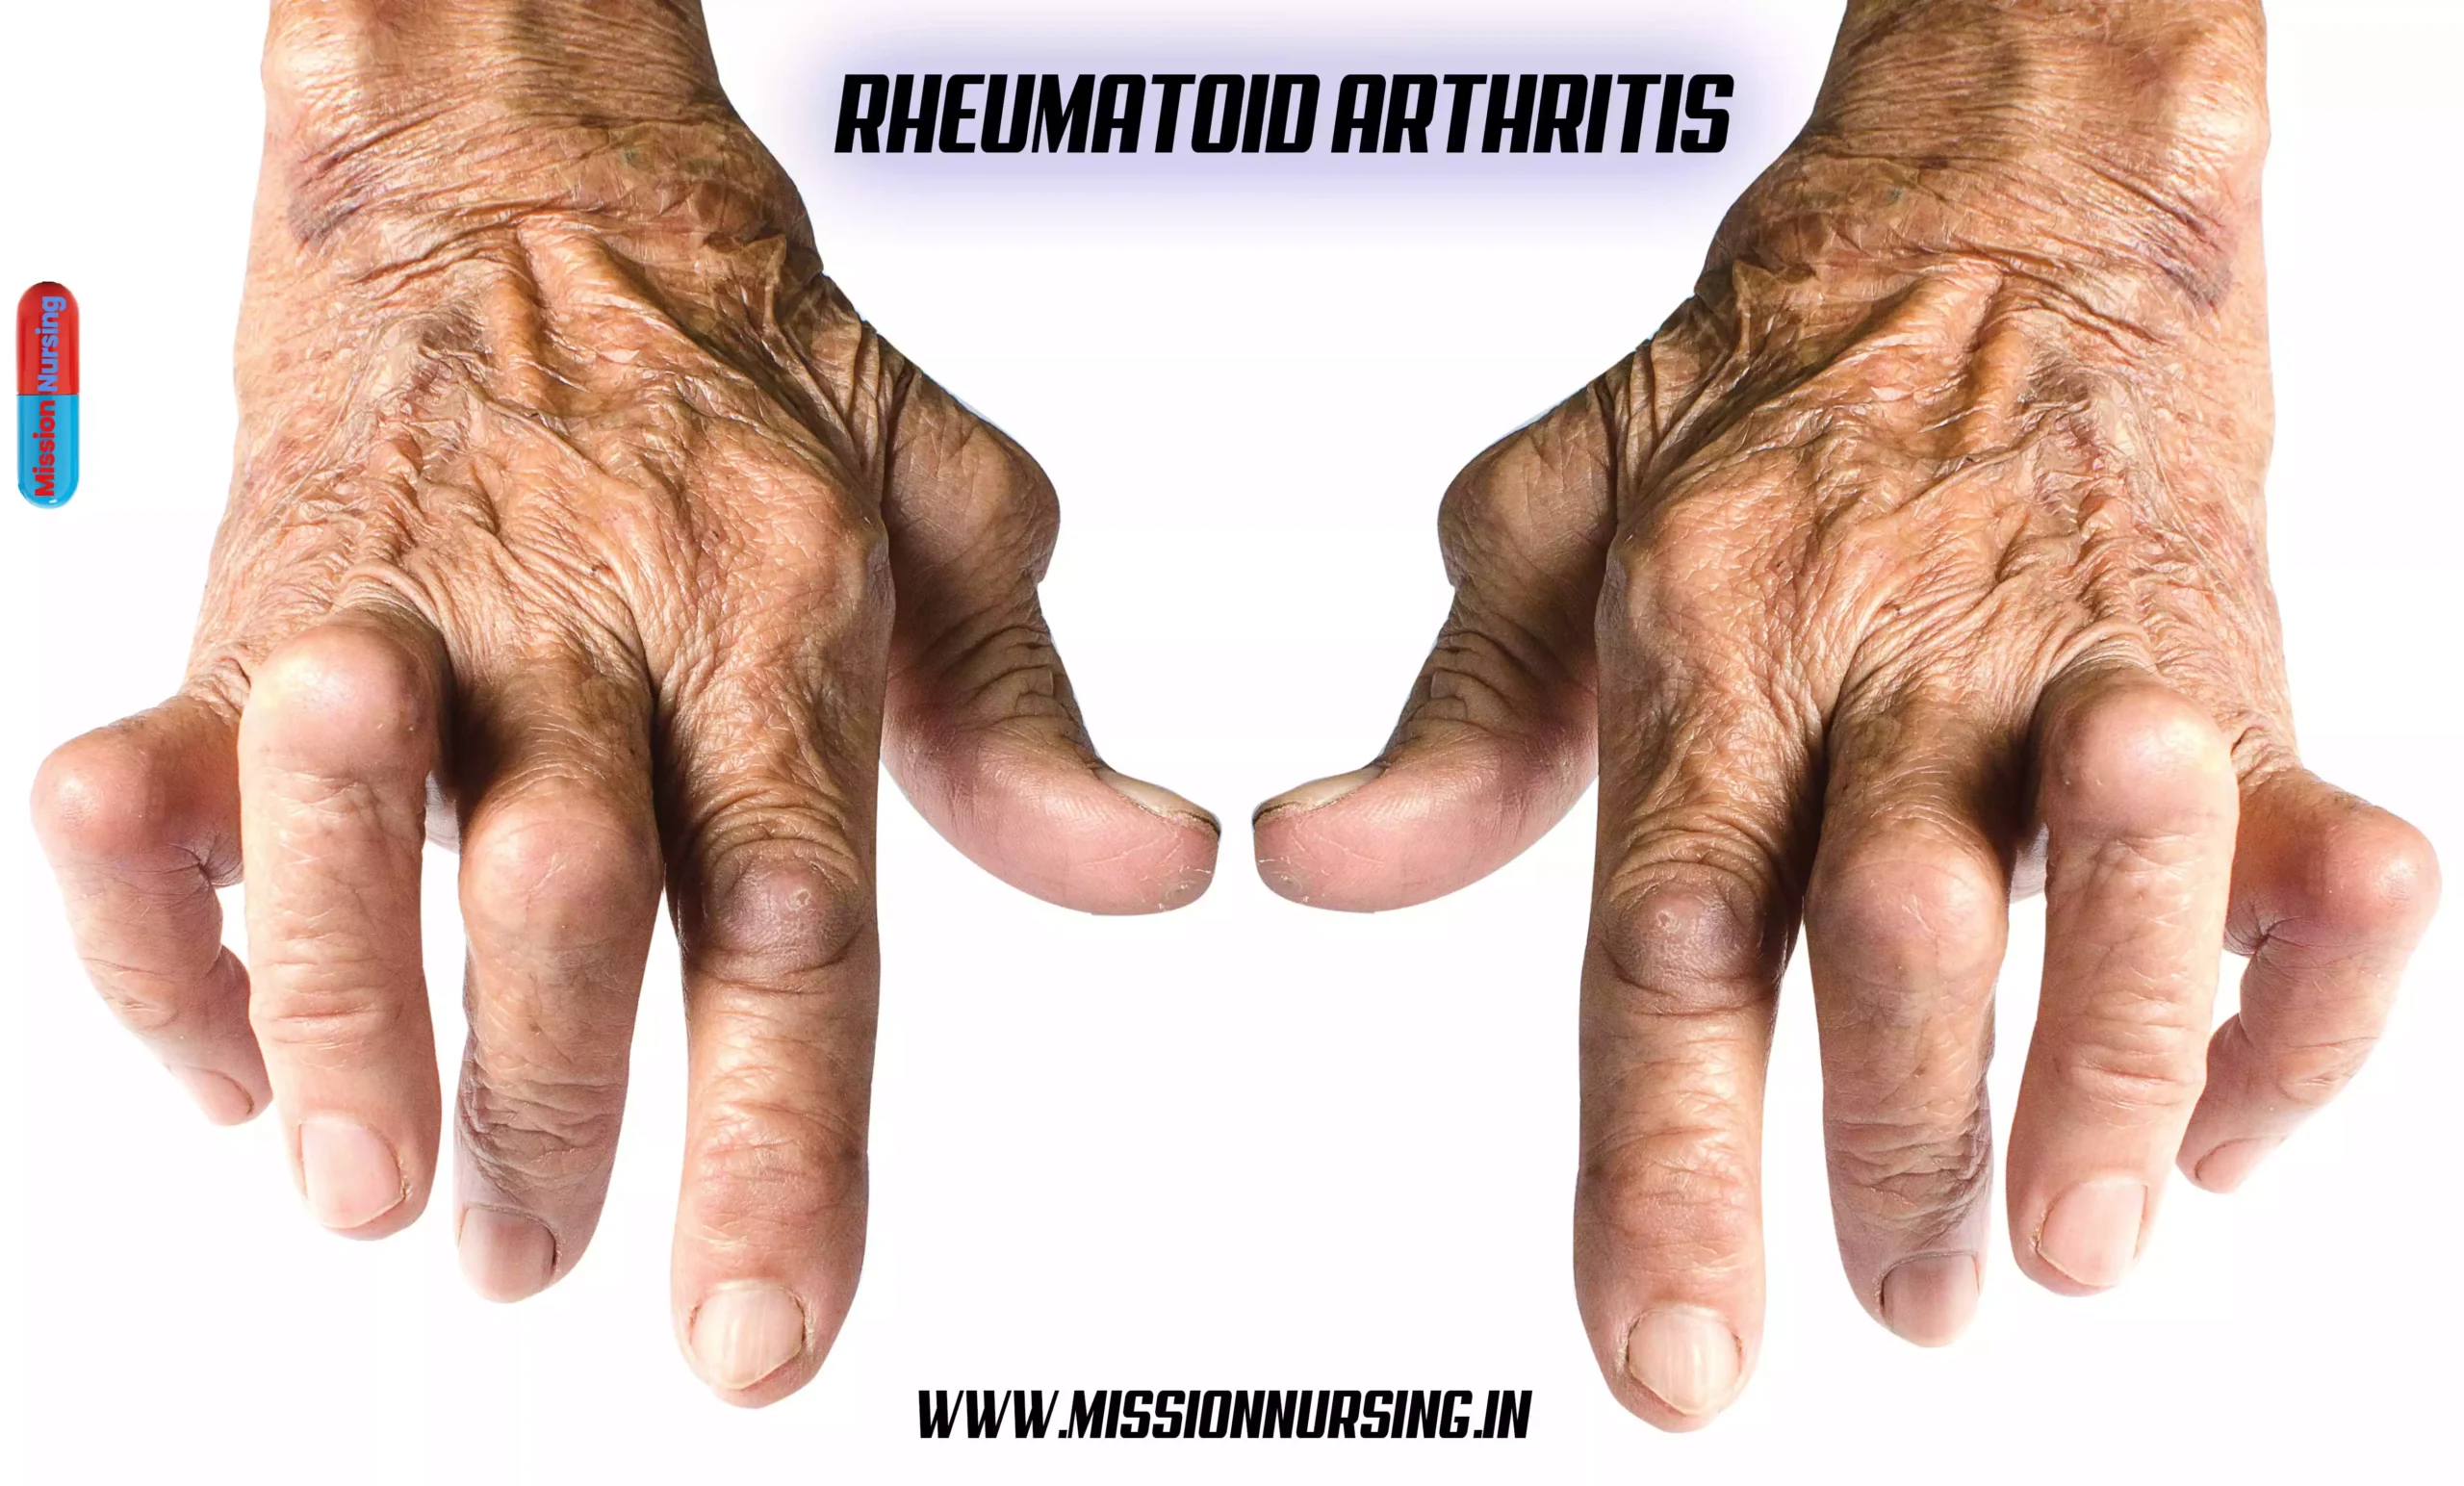 Rheumatoid arthritis Causes, symptoms, treatment